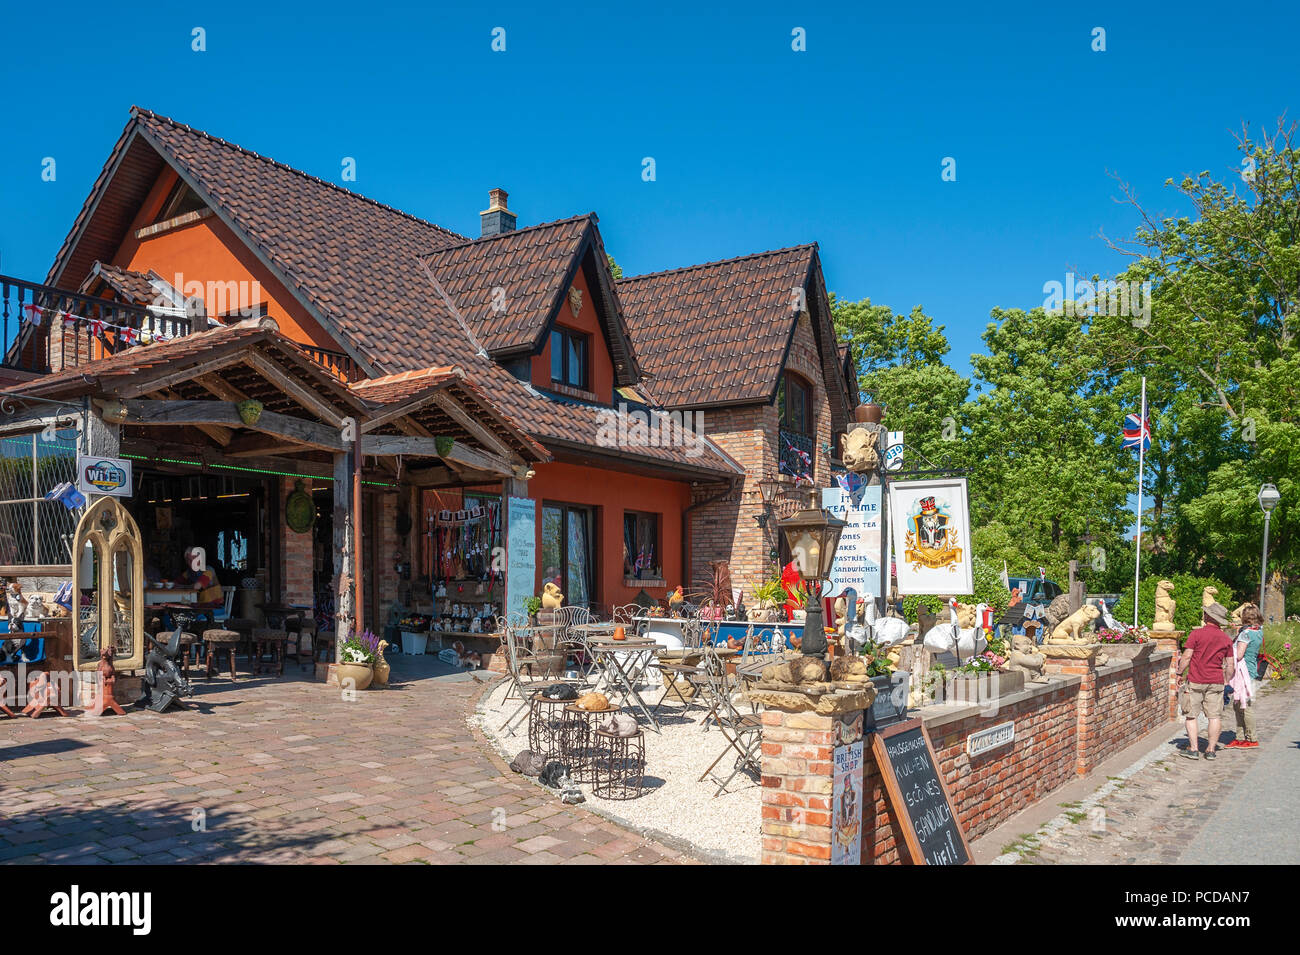 Restaurant and souvenir shop at Cape Arkona, Putgarten, Rügen, Mecklenburg-Vorpommern, Germany, Europe Stock Photo